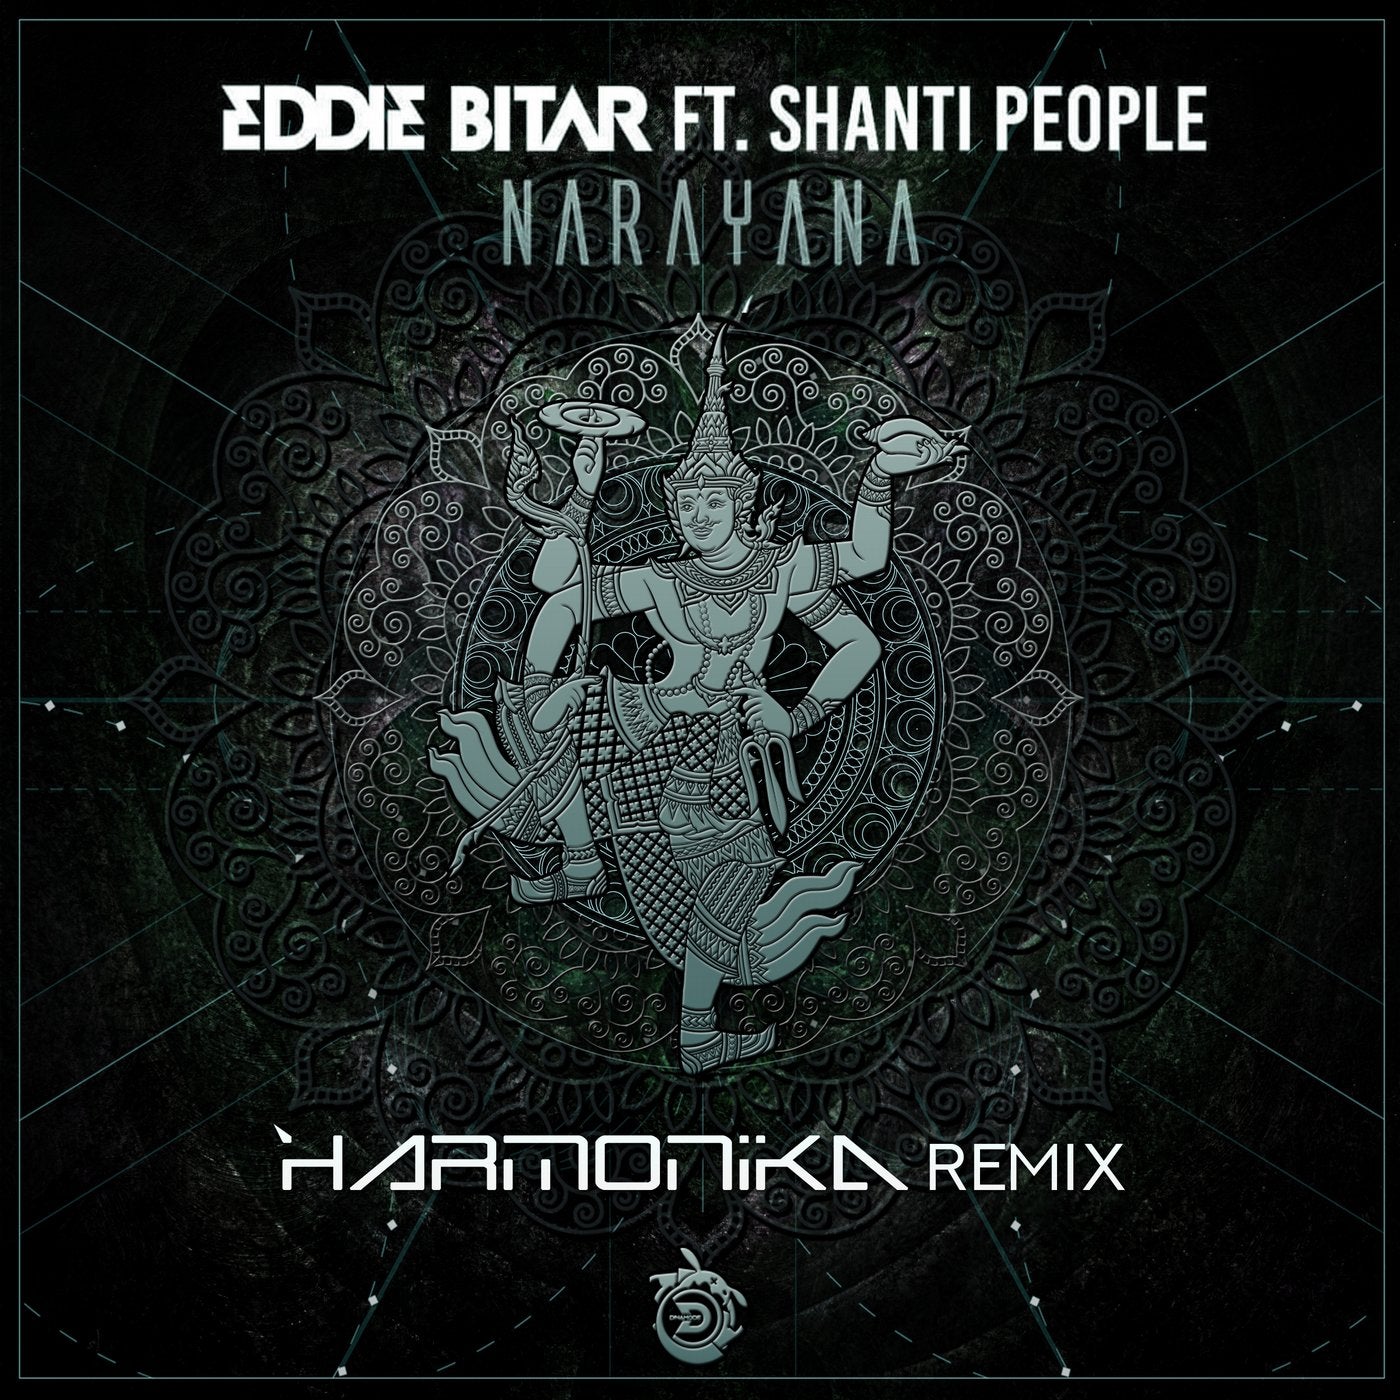 Narayana - Harmonika Remix